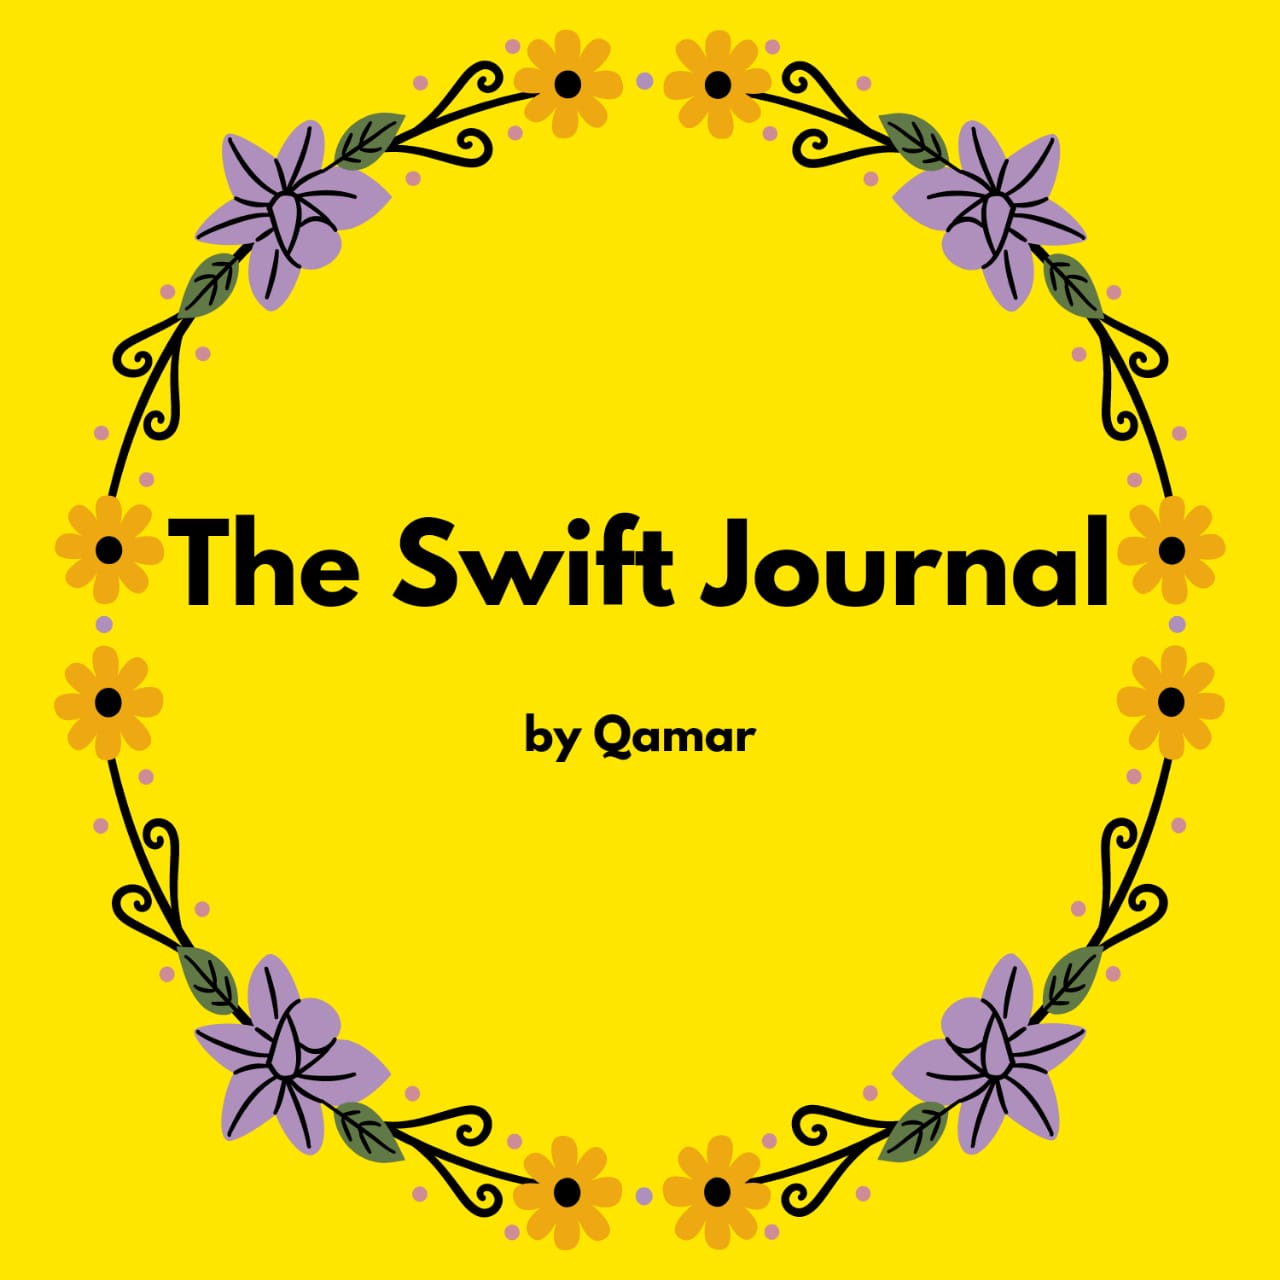 The Swift Journal